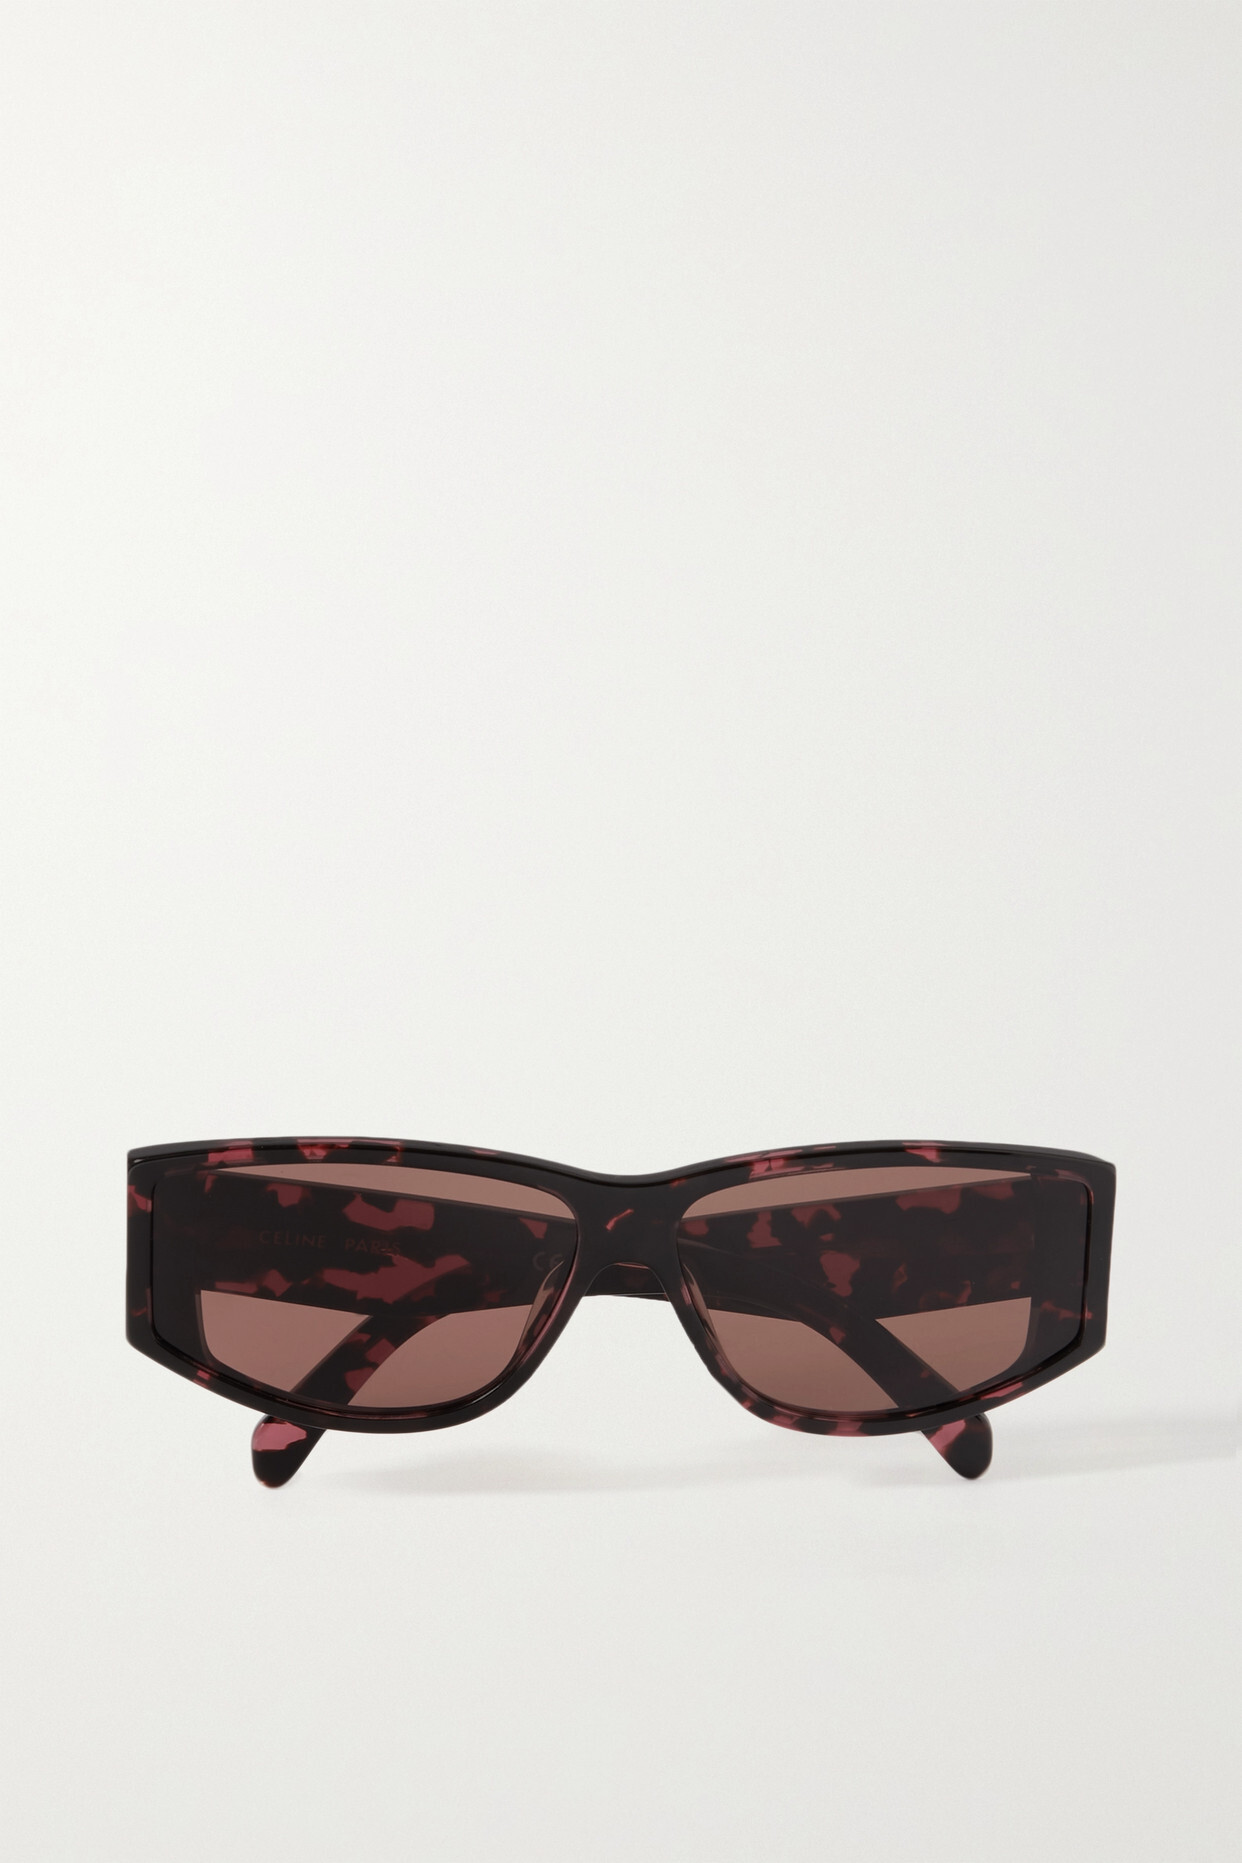 CELINE Eyewear - D-frame Tortoiseshell Acetate And Gold-tone Sunglasses - One size